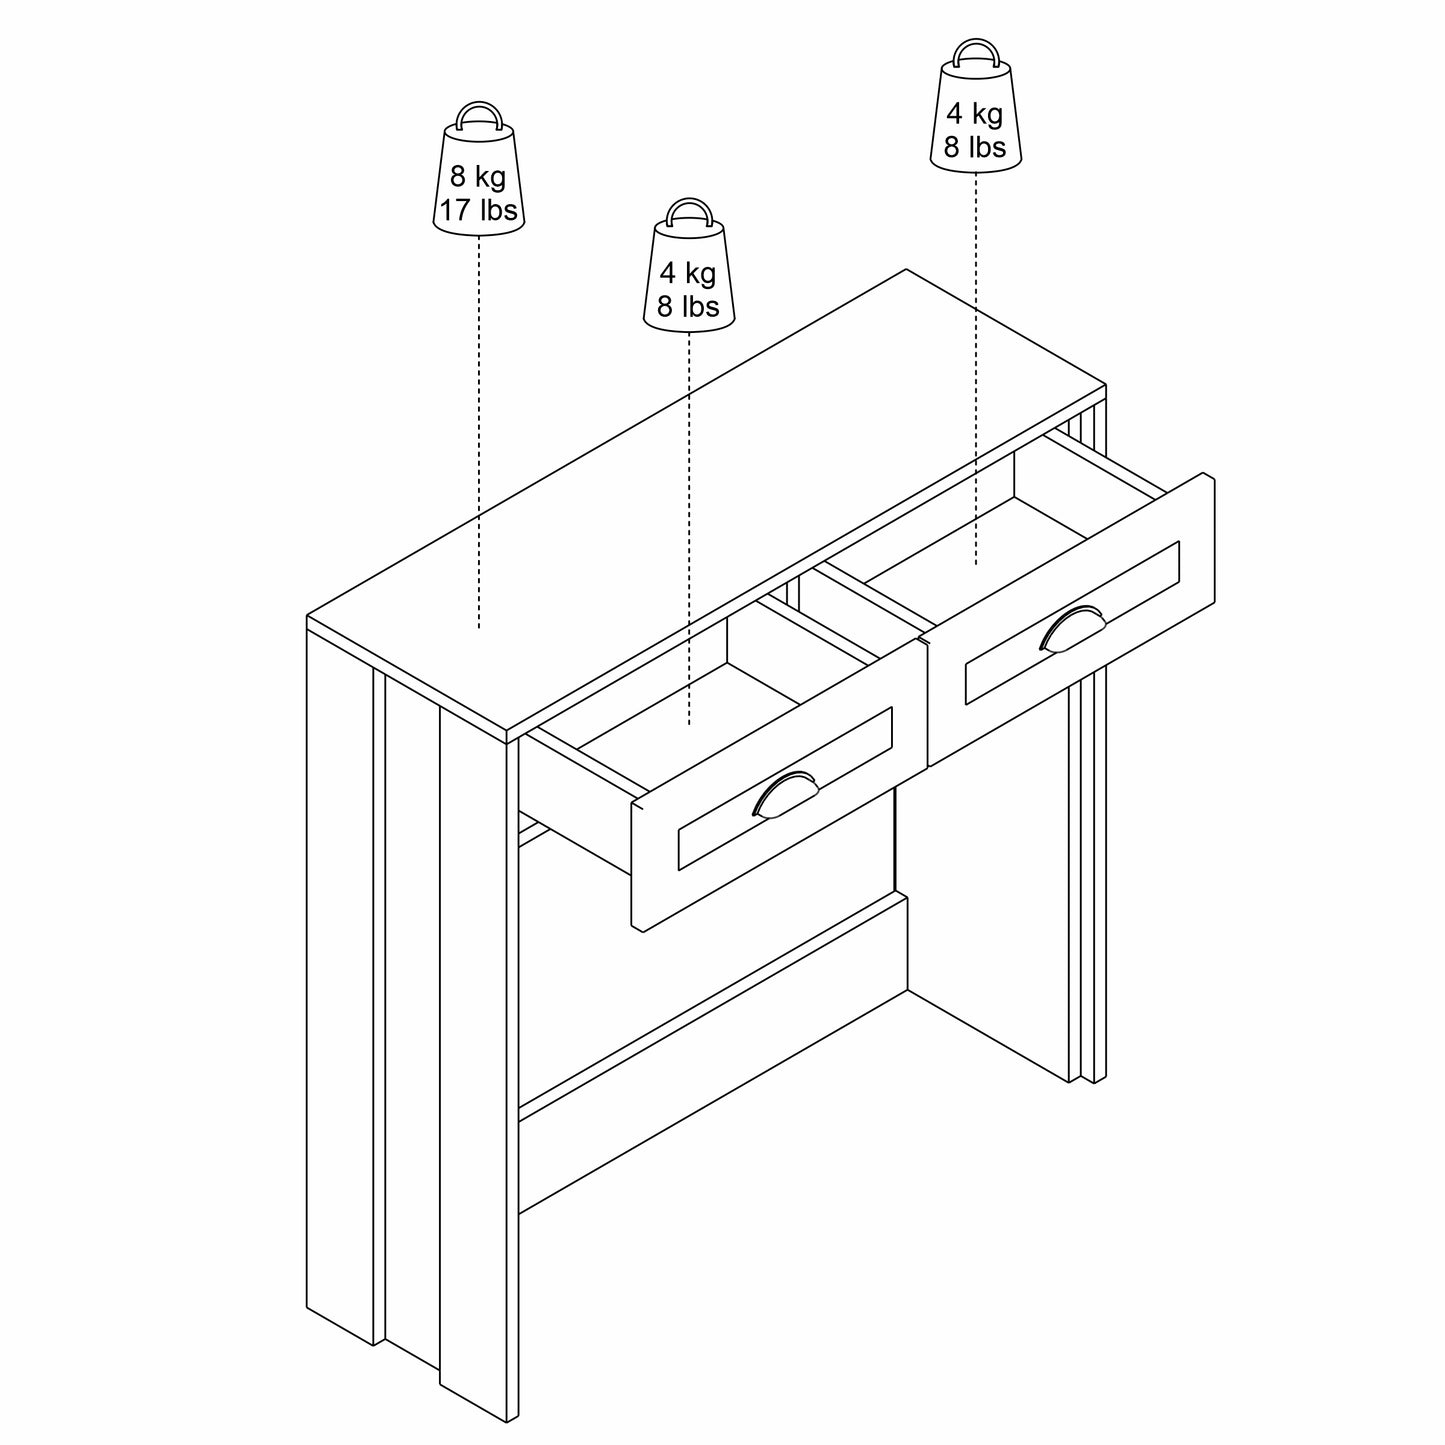 Maxi 2 Drawer Modern Design Dresser - White Color